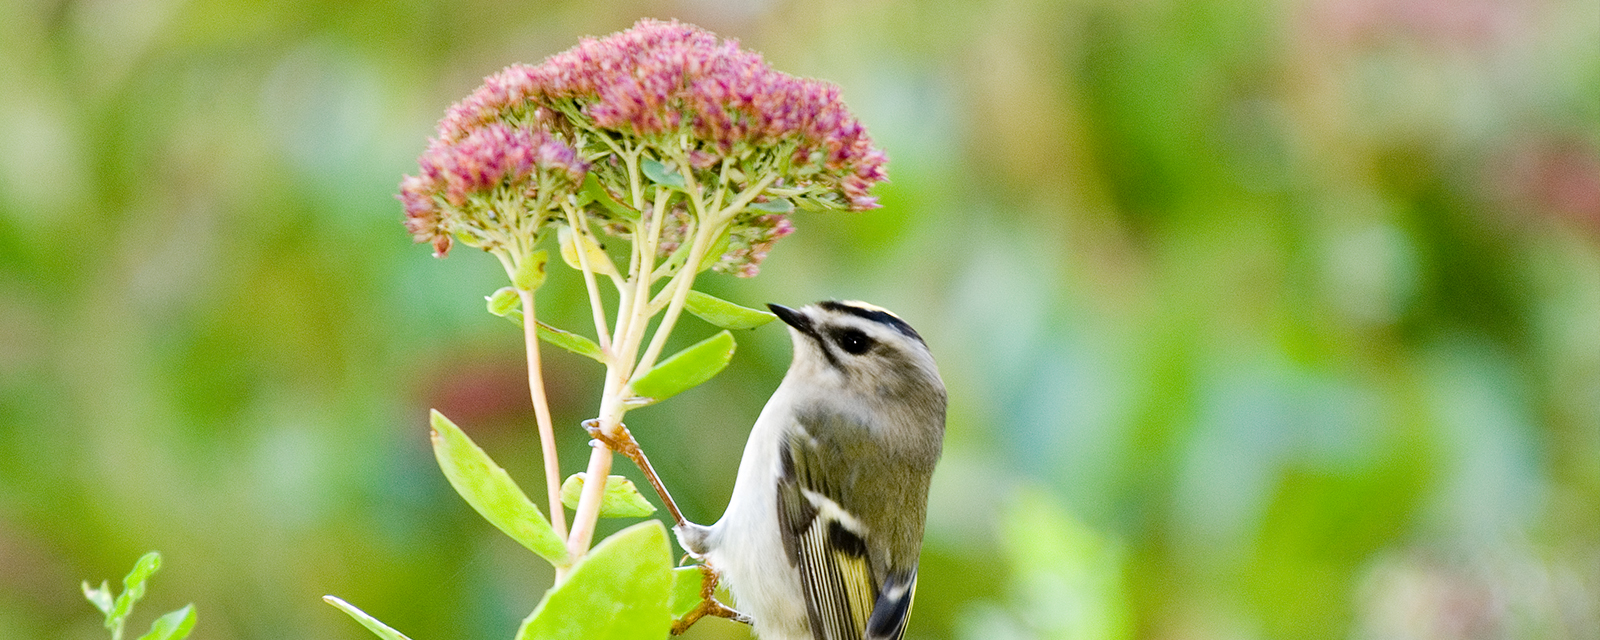 Wild bird harvesting nectar from a flower